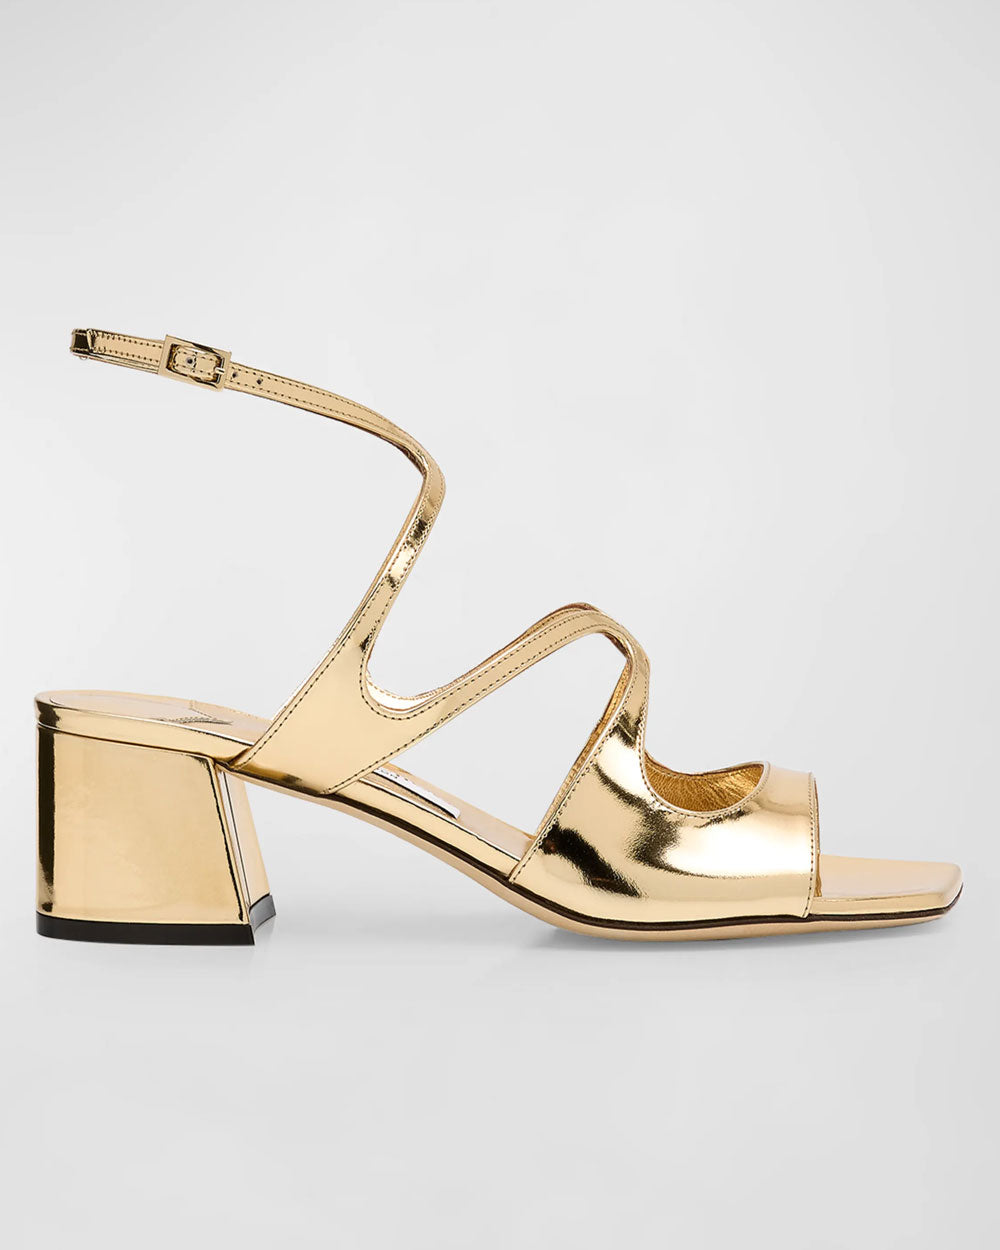 Azilia Strappy Metallic Sandal in Gold